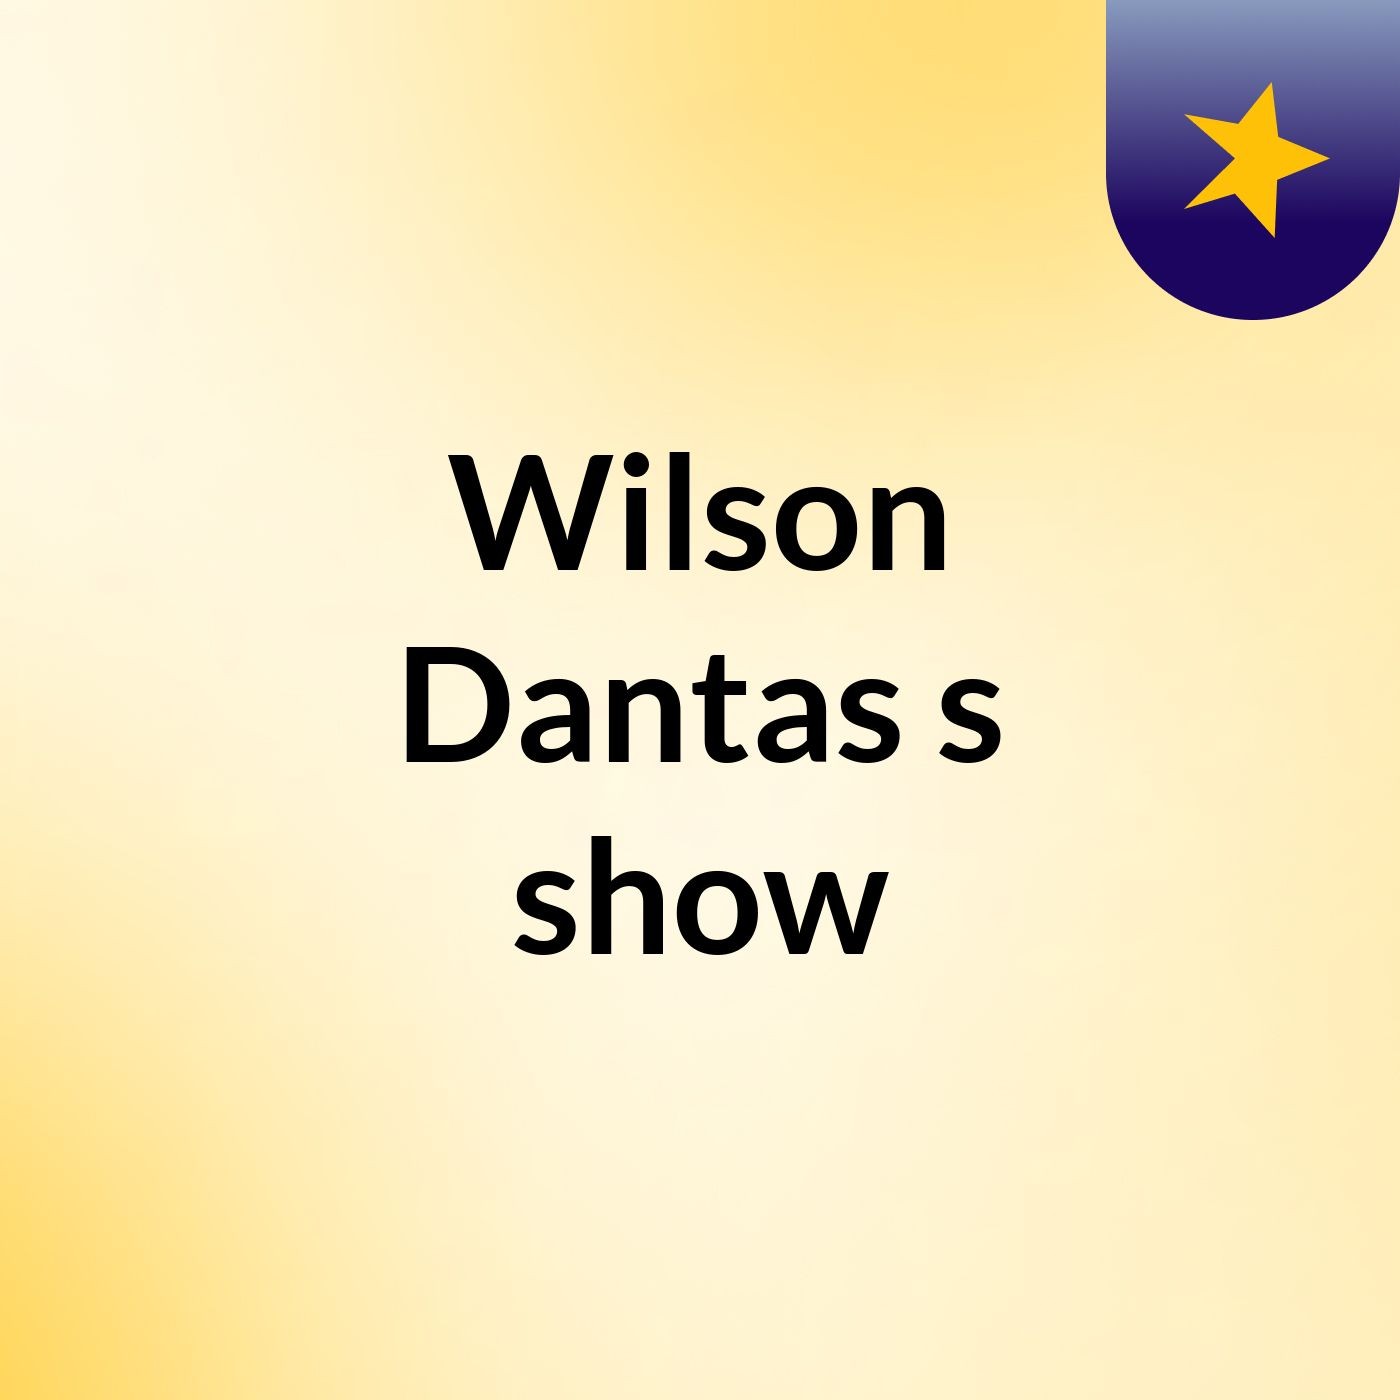 Wilson Dantas's show